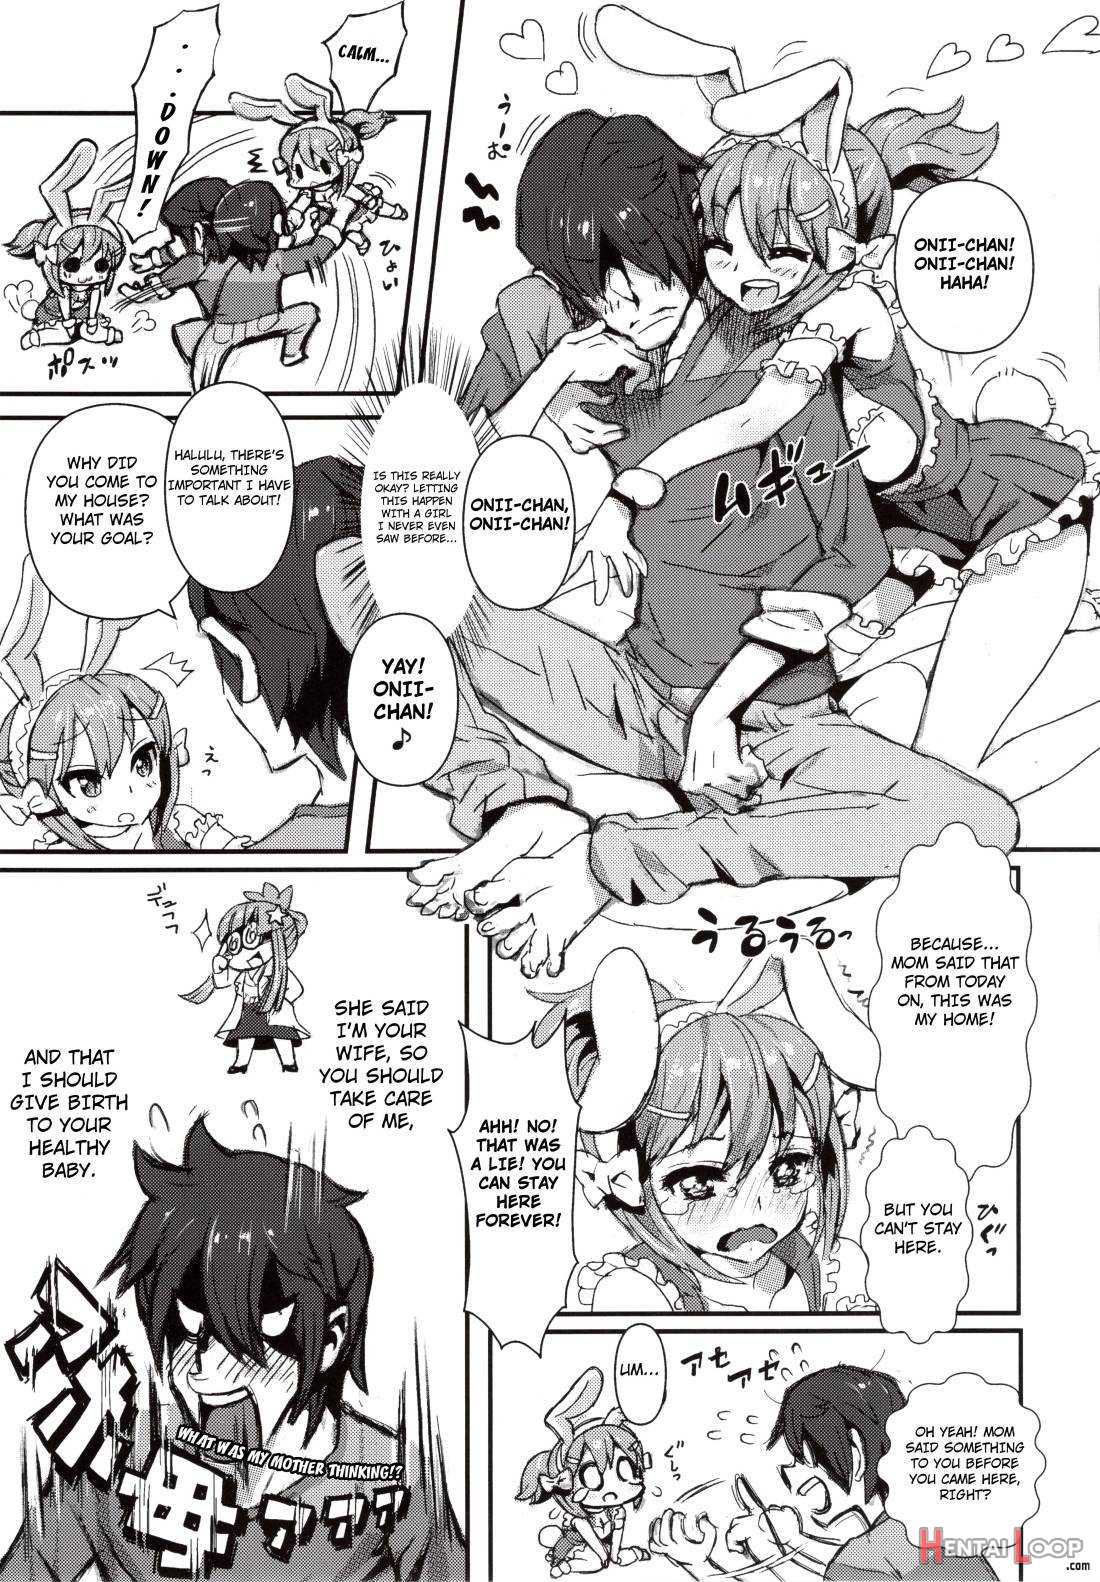 Mimipull Hachi page 13